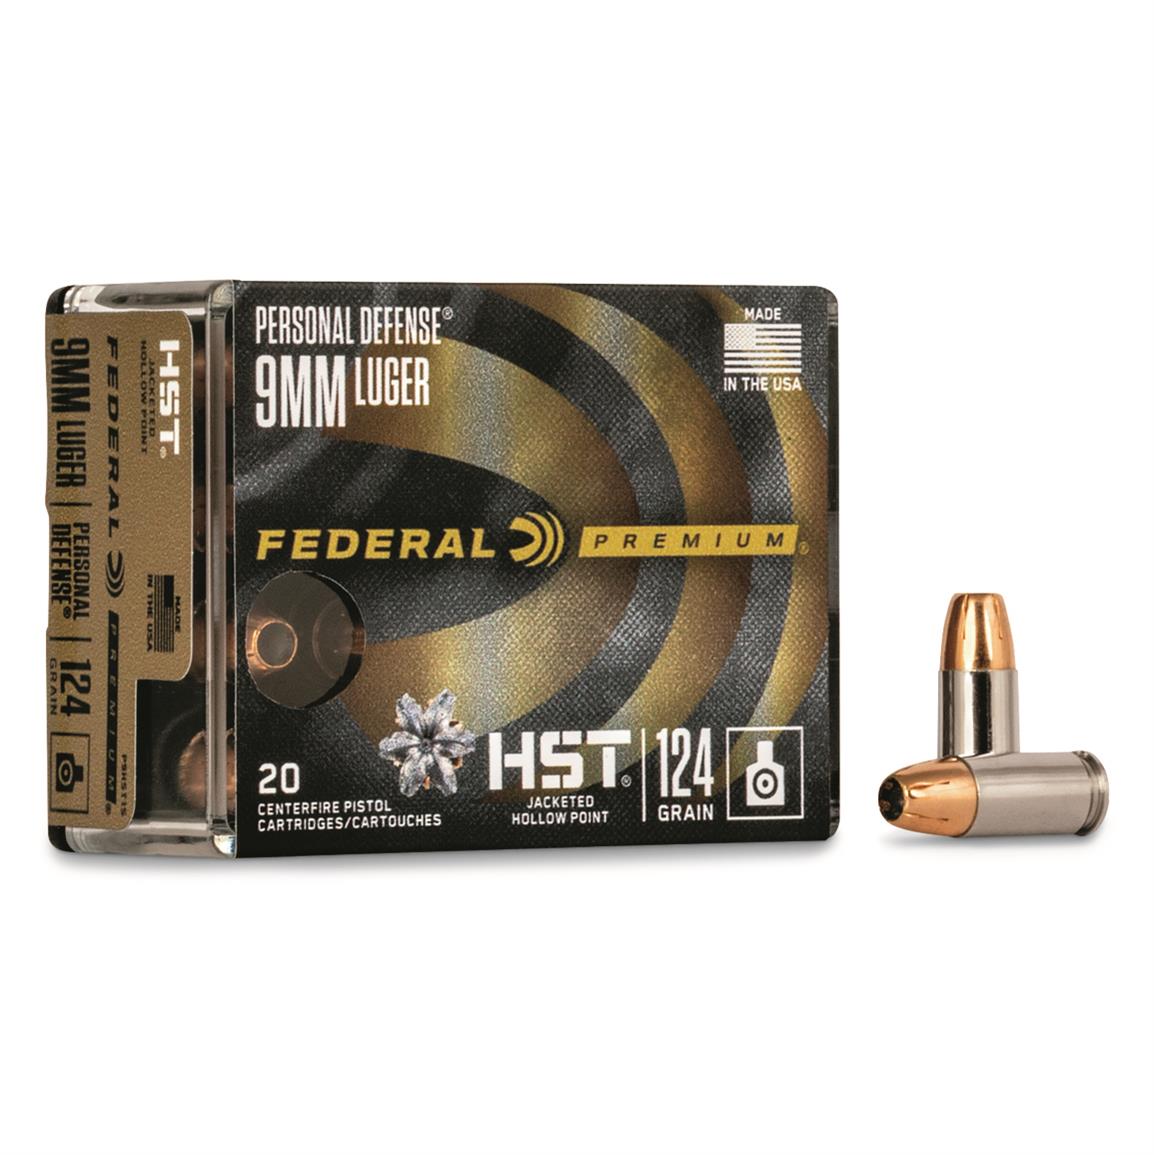 Federal Premium Personal Defense, 9mm, HST, 124 Grain, 20 Rounds